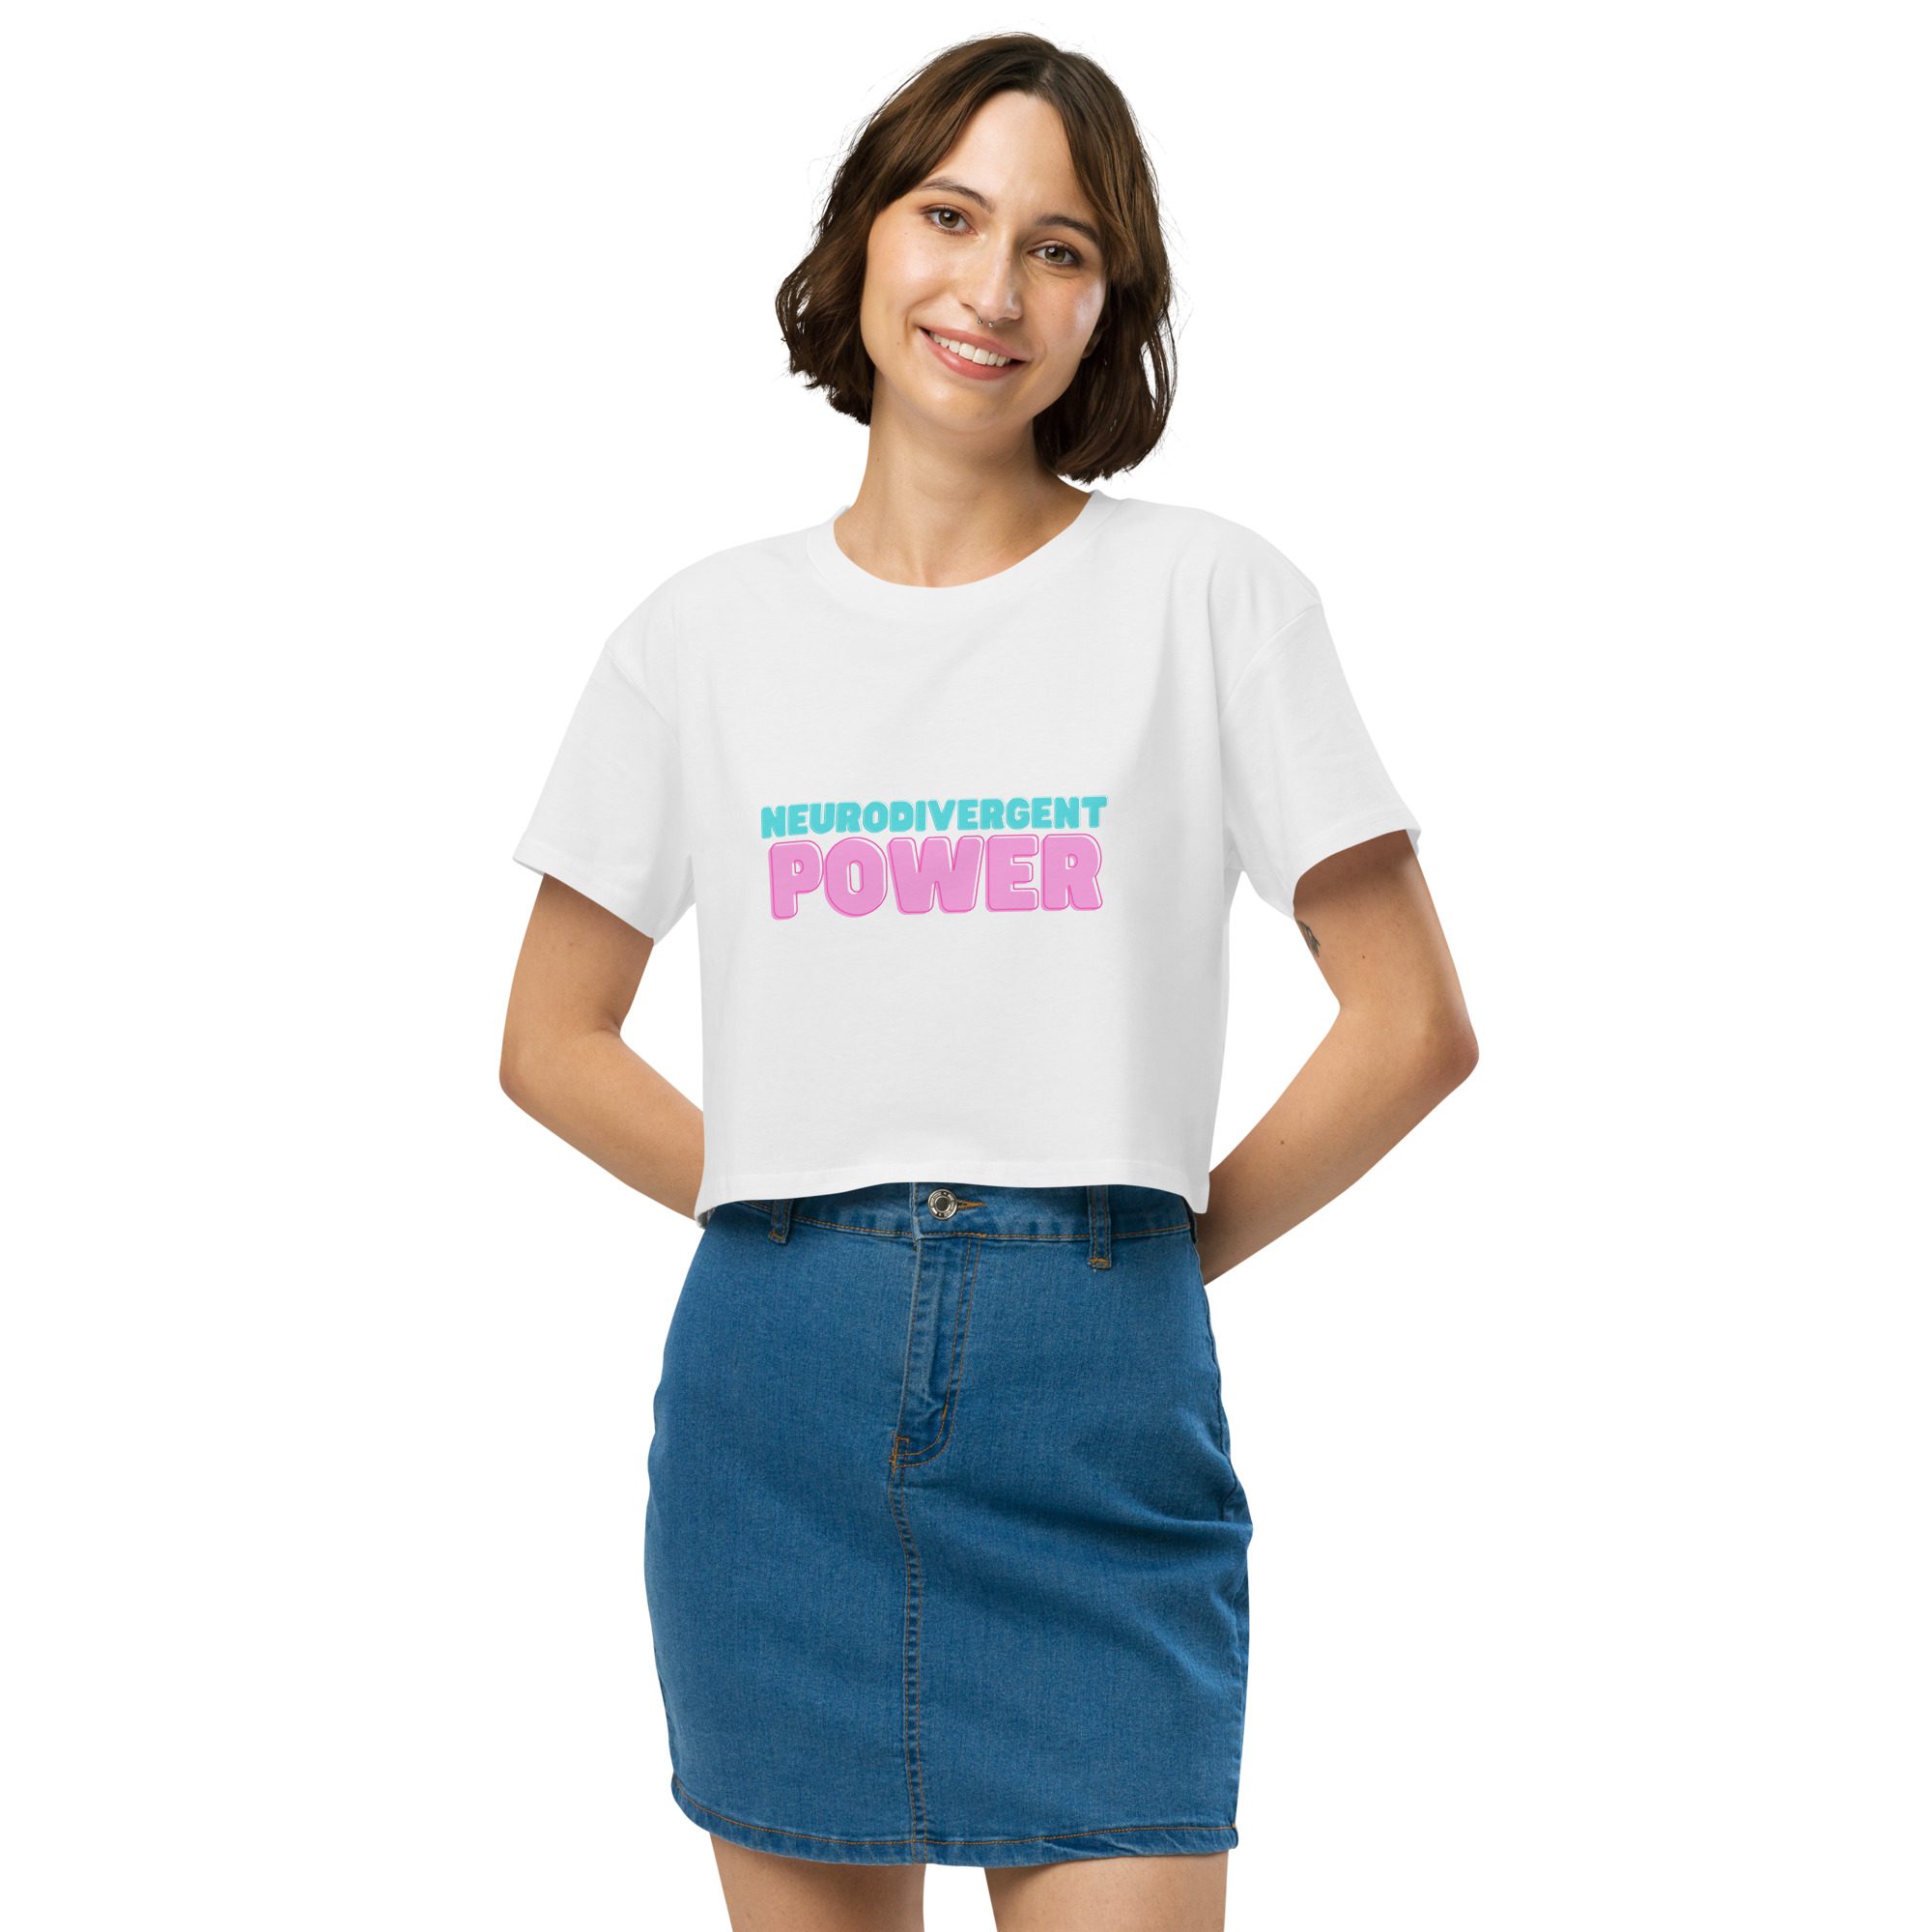 Neurodivergent Power Women’s Crop Top